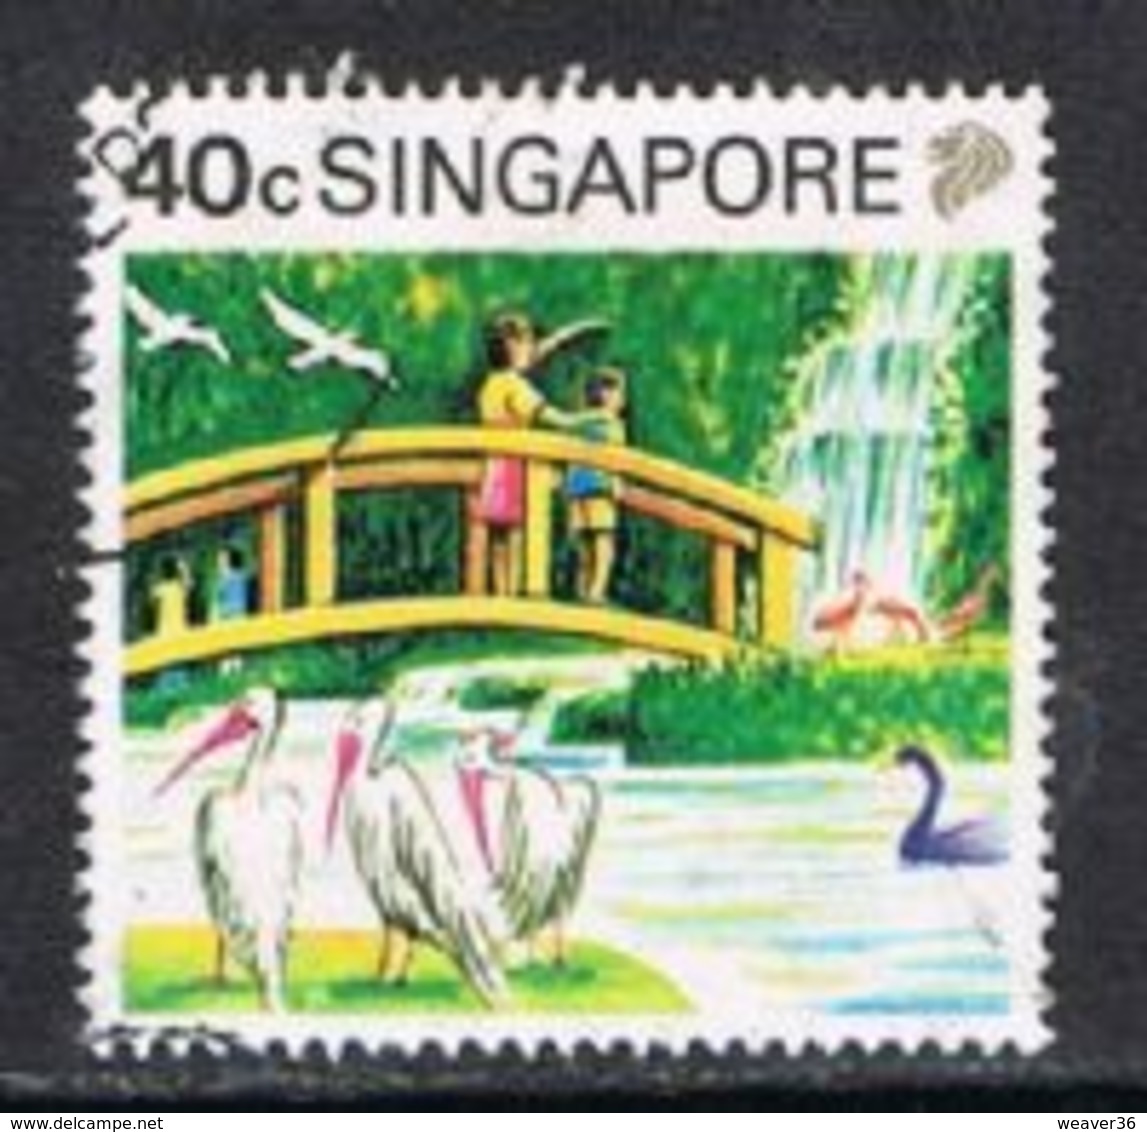 Singapore SG630 1990 Tourism 40c Good/fine Used [15/14383/2D] - Singapore (1959-...)